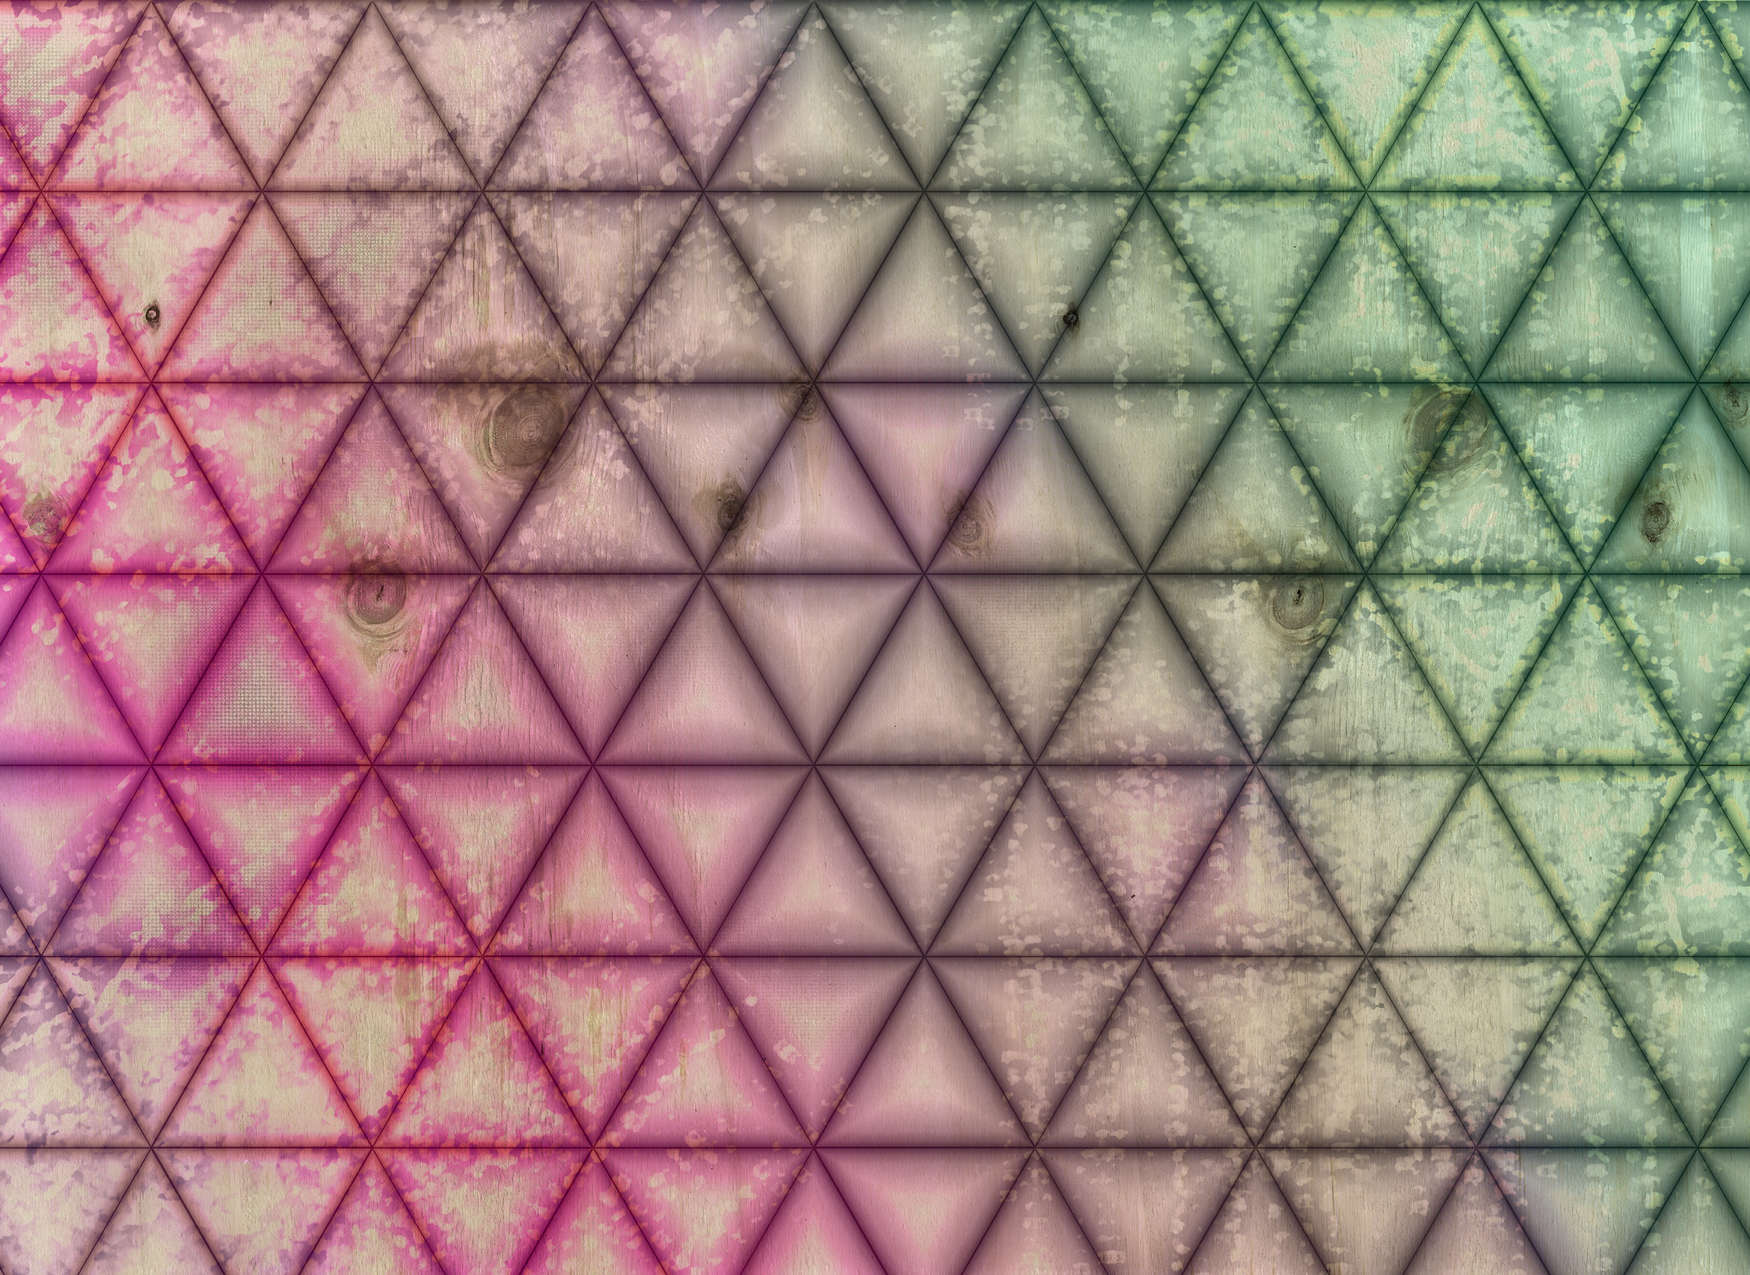             Photo wallpaper geometric triangle pattern in wood look - green, pink
        